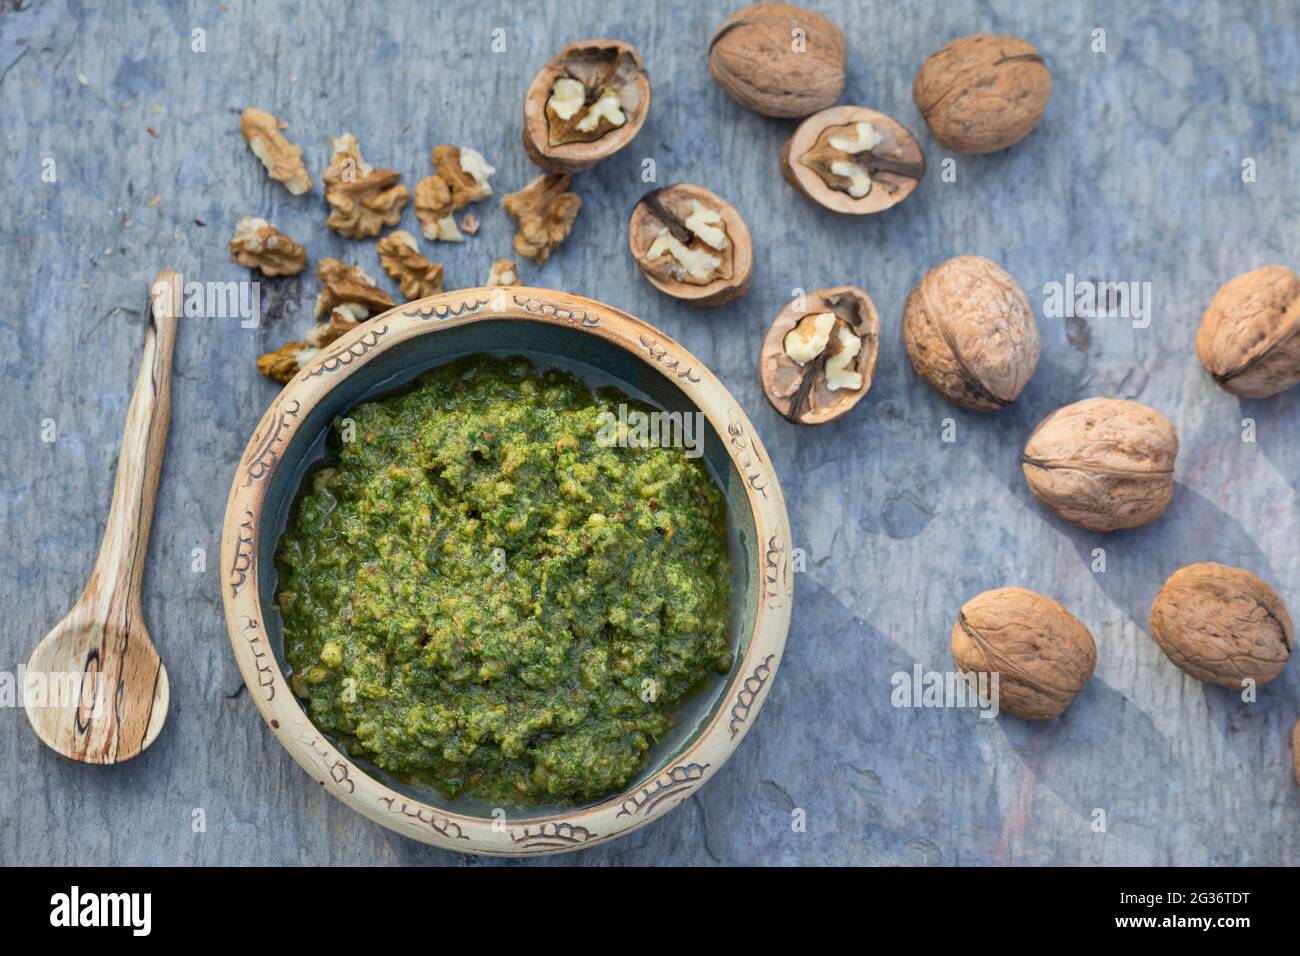 walnut (Juglans regia), home made walnut pesto Stock Photo